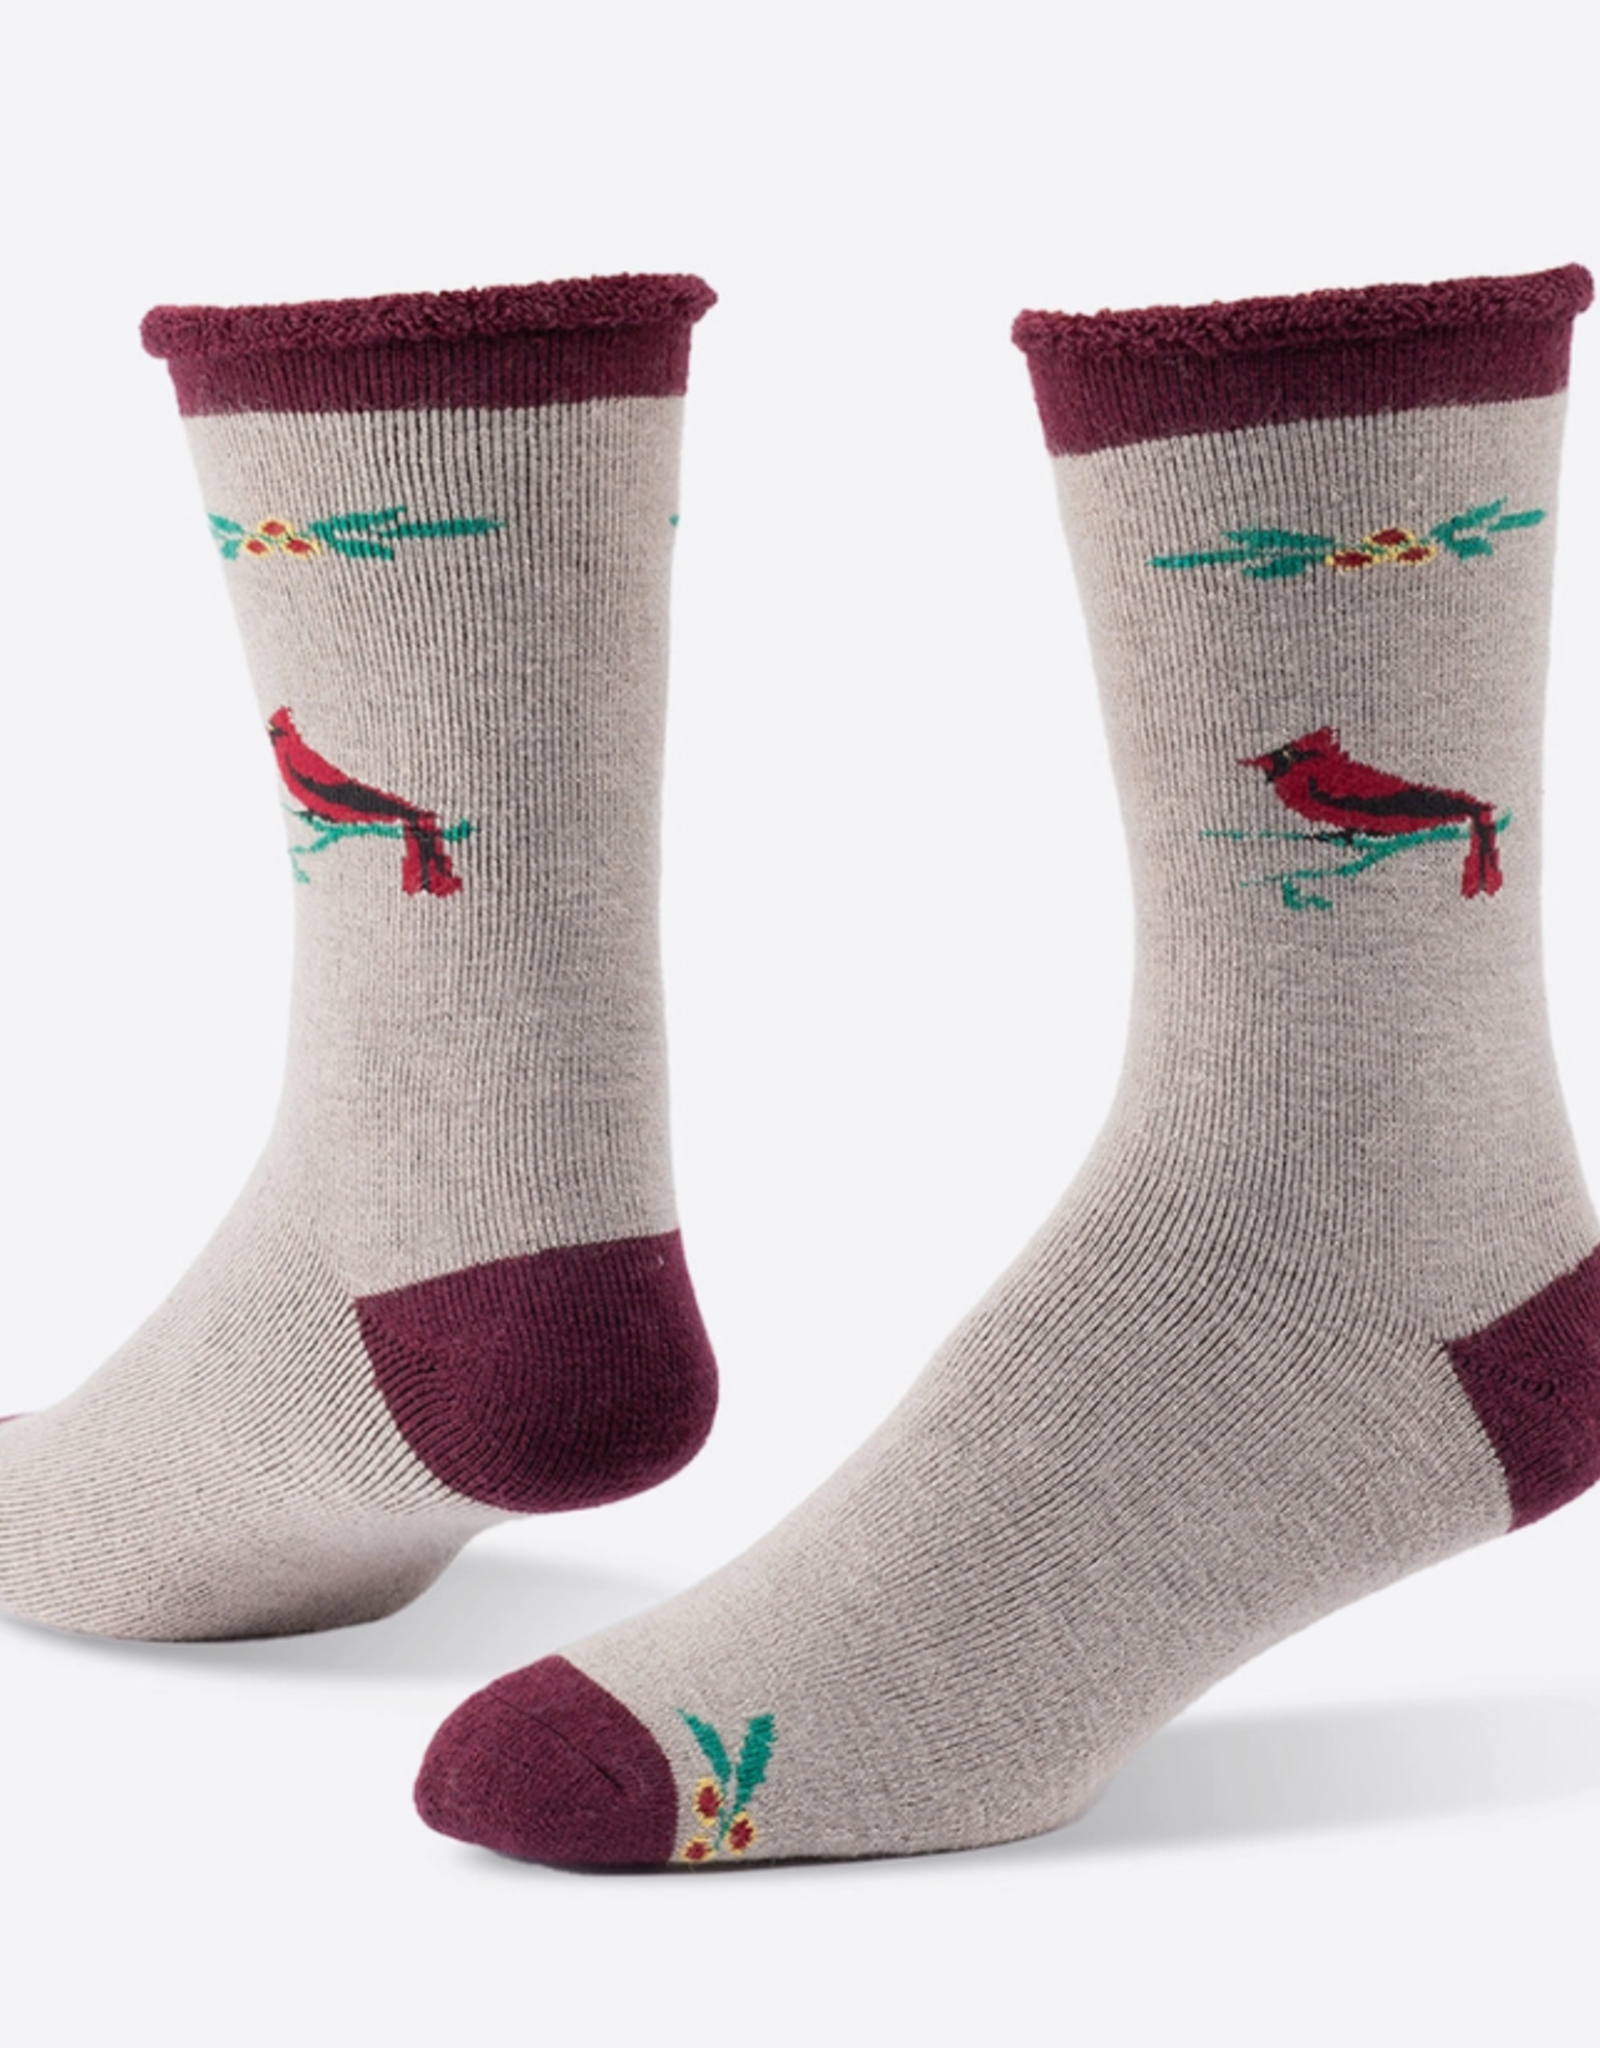 Maggie's Organics Wool Snuggle Socks - Cardinal Taupe